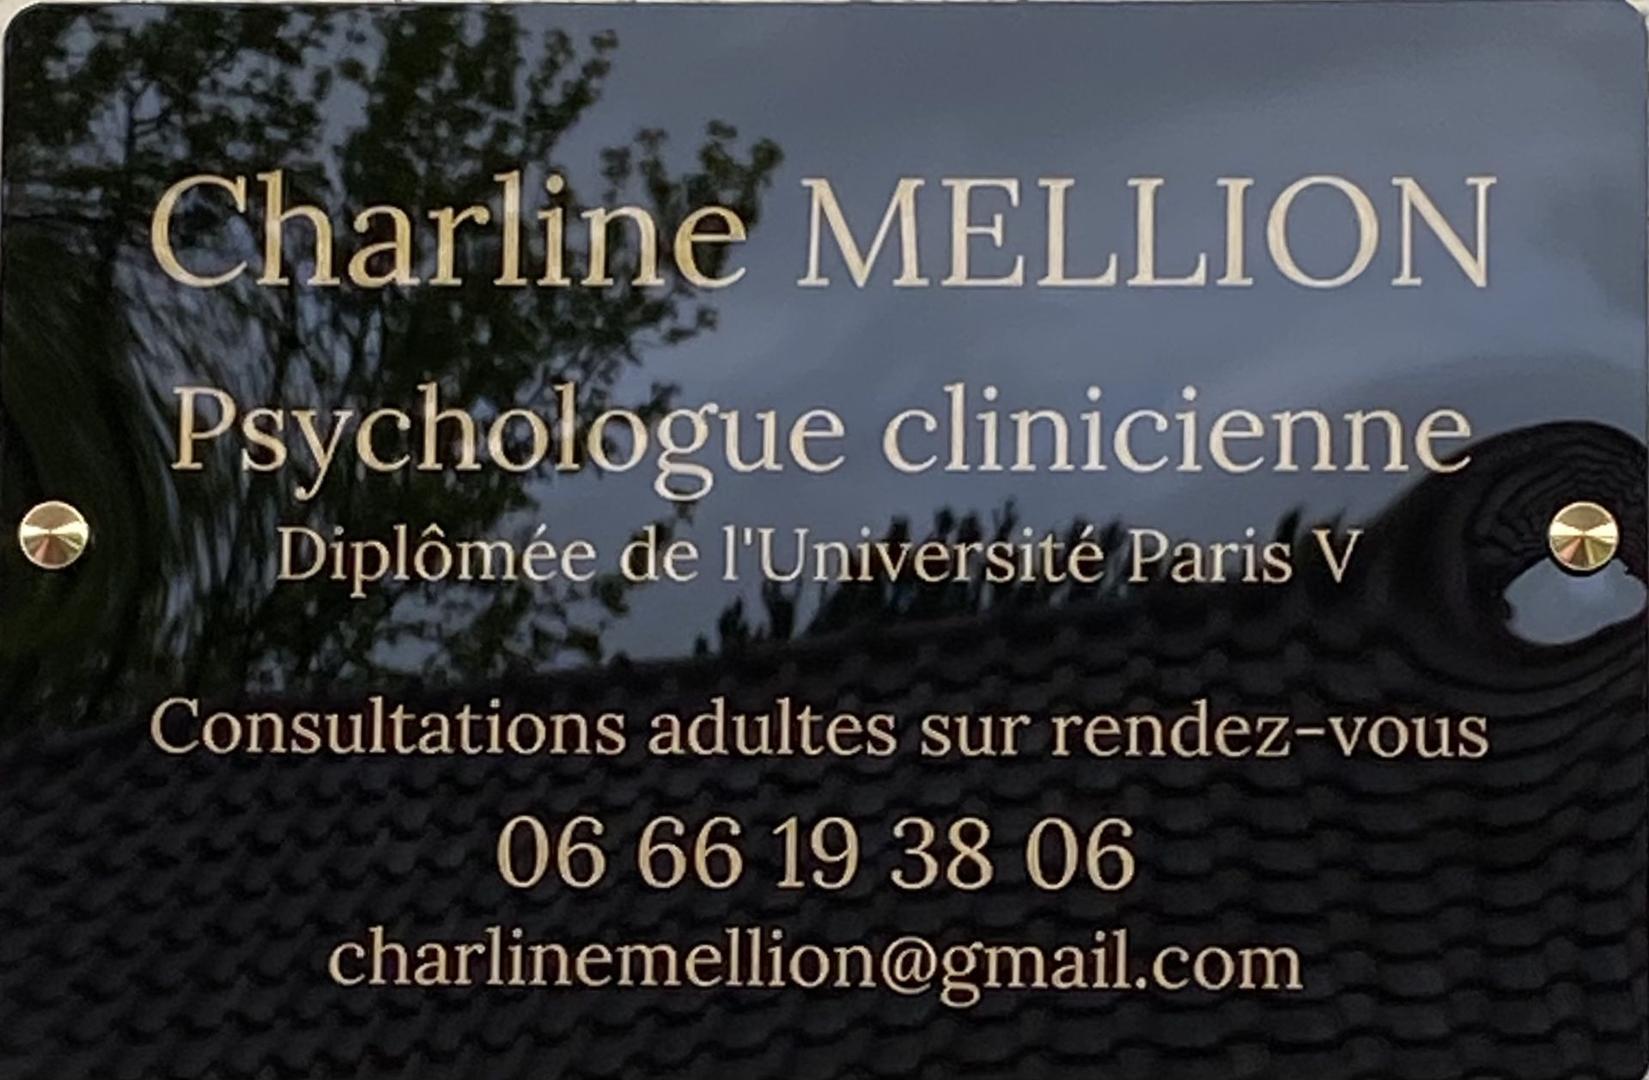 Mellion Charline Gif Sur Yvette